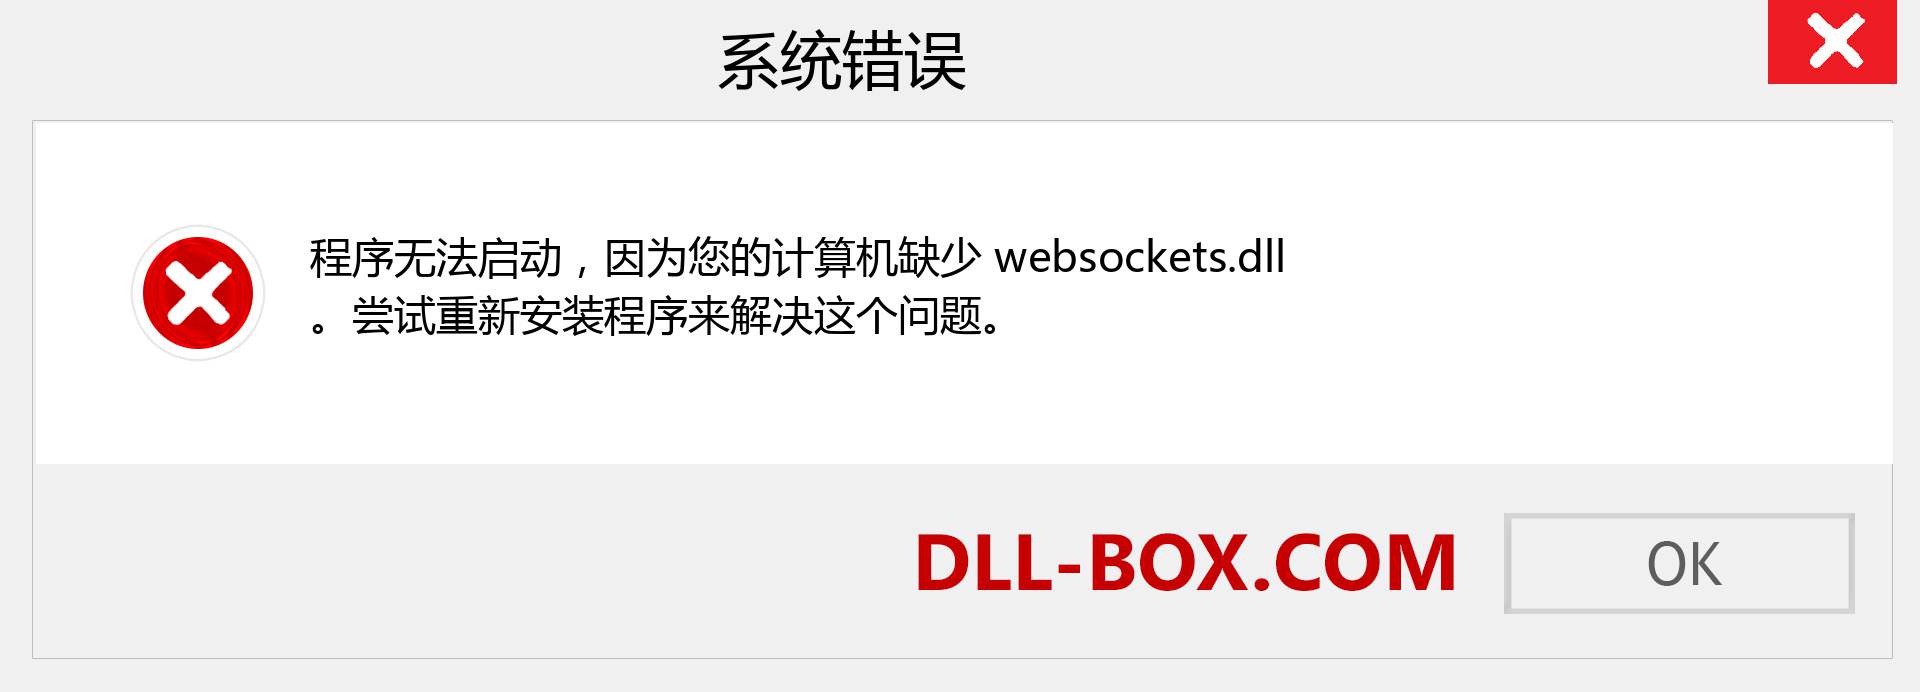 websockets.dll 文件丢失？。 适用于 Windows 7、8、10 的下载 - 修复 Windows、照片、图像上的 websockets dll 丢失错误